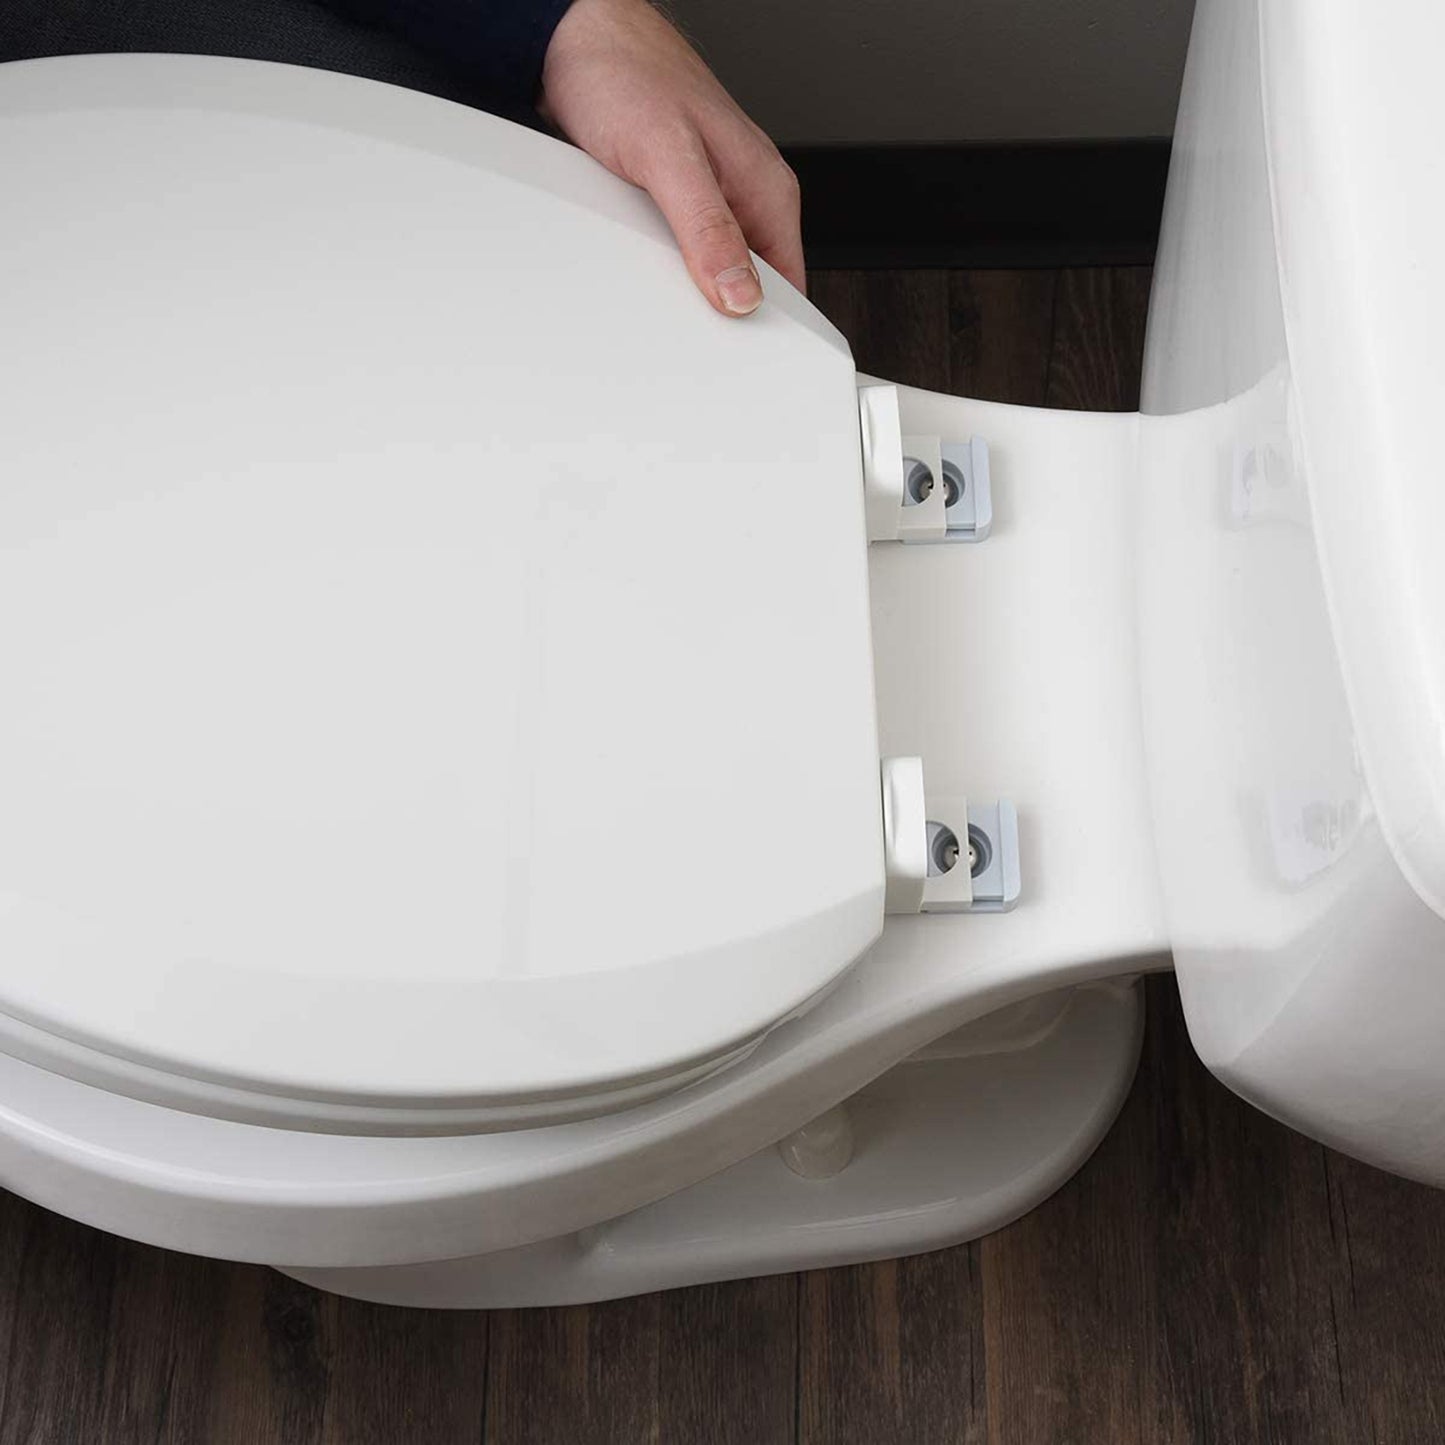 Hausen Quick-Install Soft-Close Toilet Seat, Round, White, 1-Pack